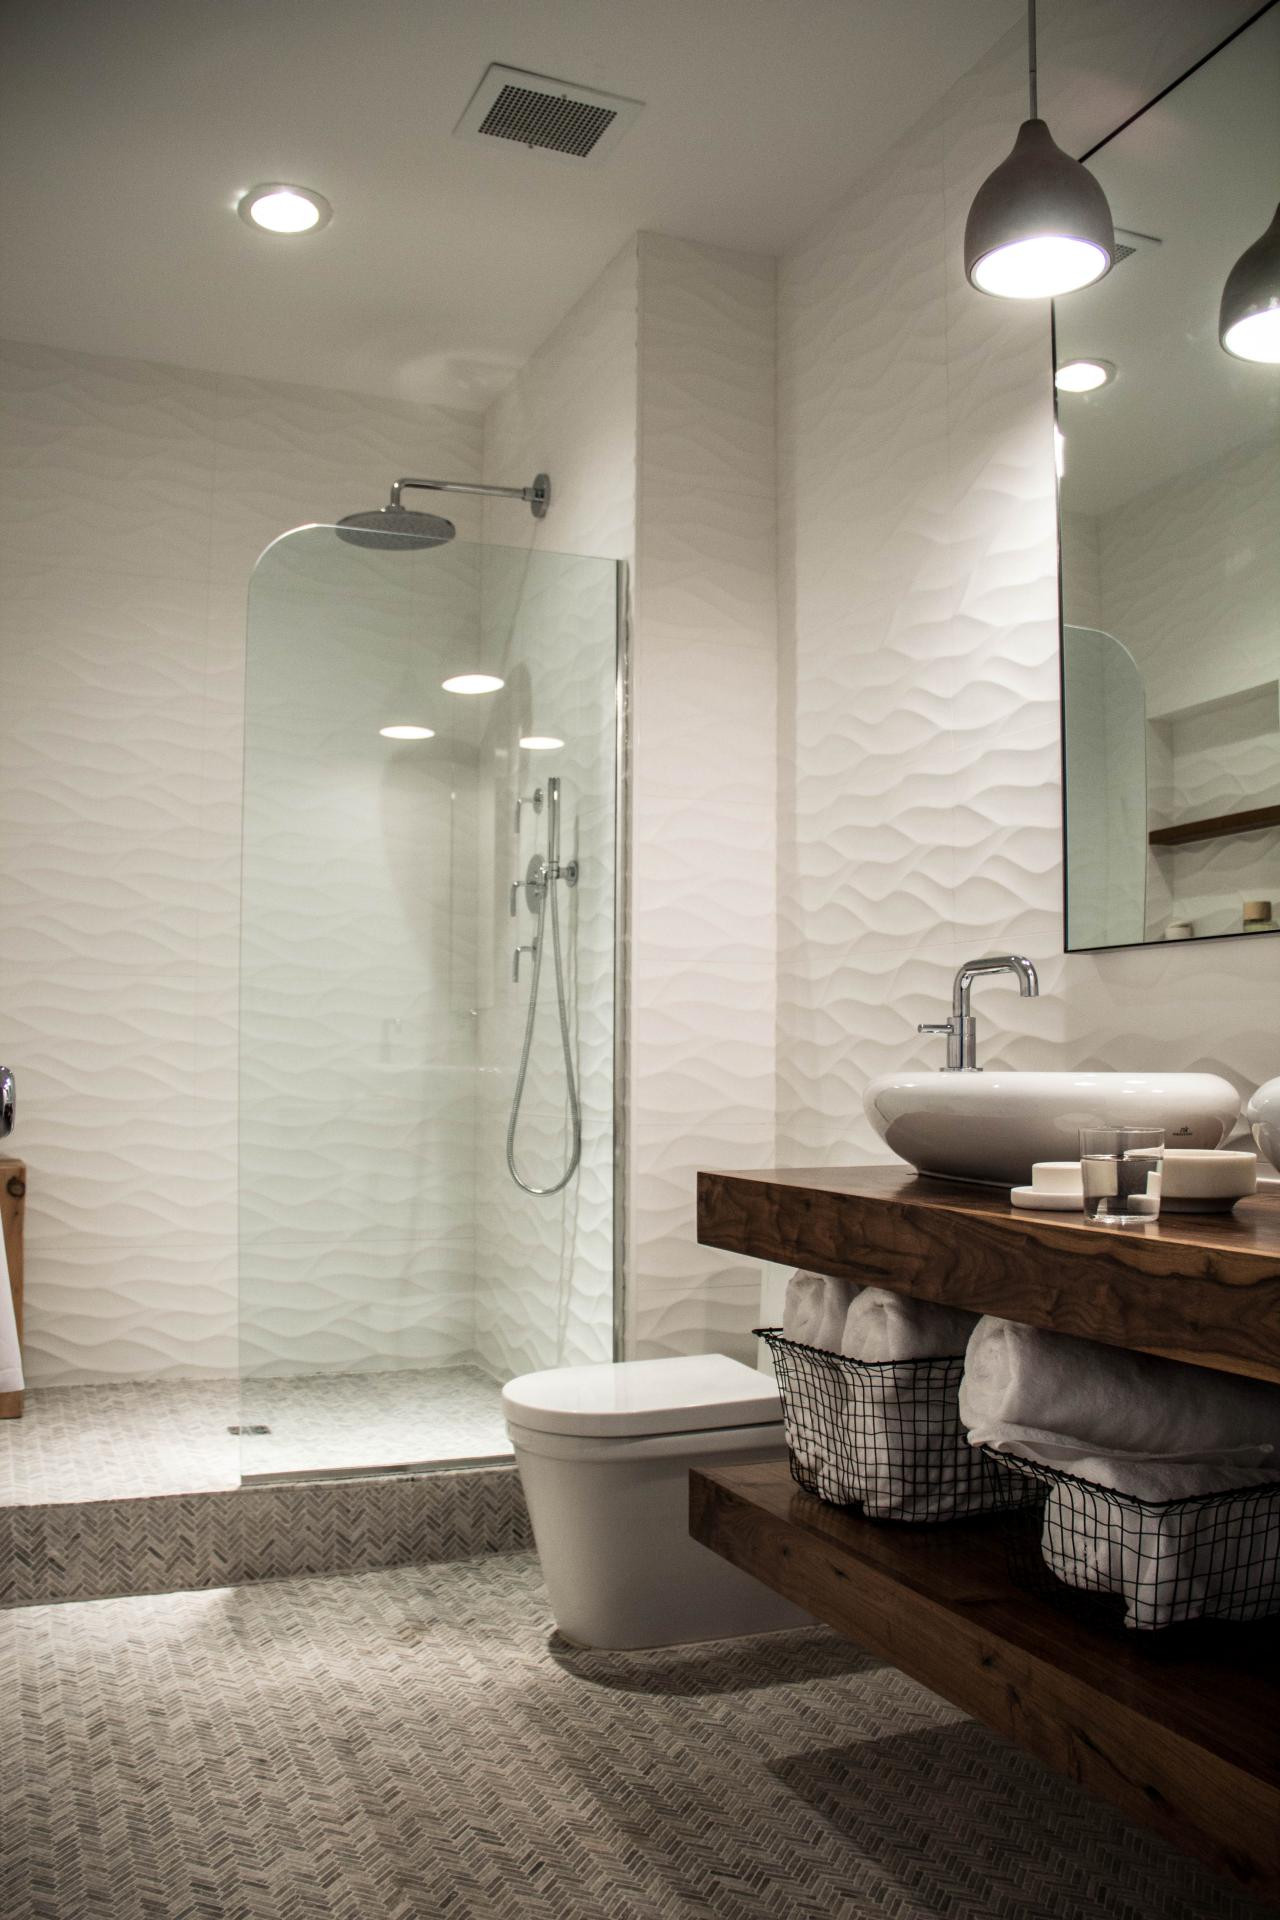 Bathroom Walk In Shower Ideas
 10 Walk In Shower Designs To Upgrade Your Bathroom